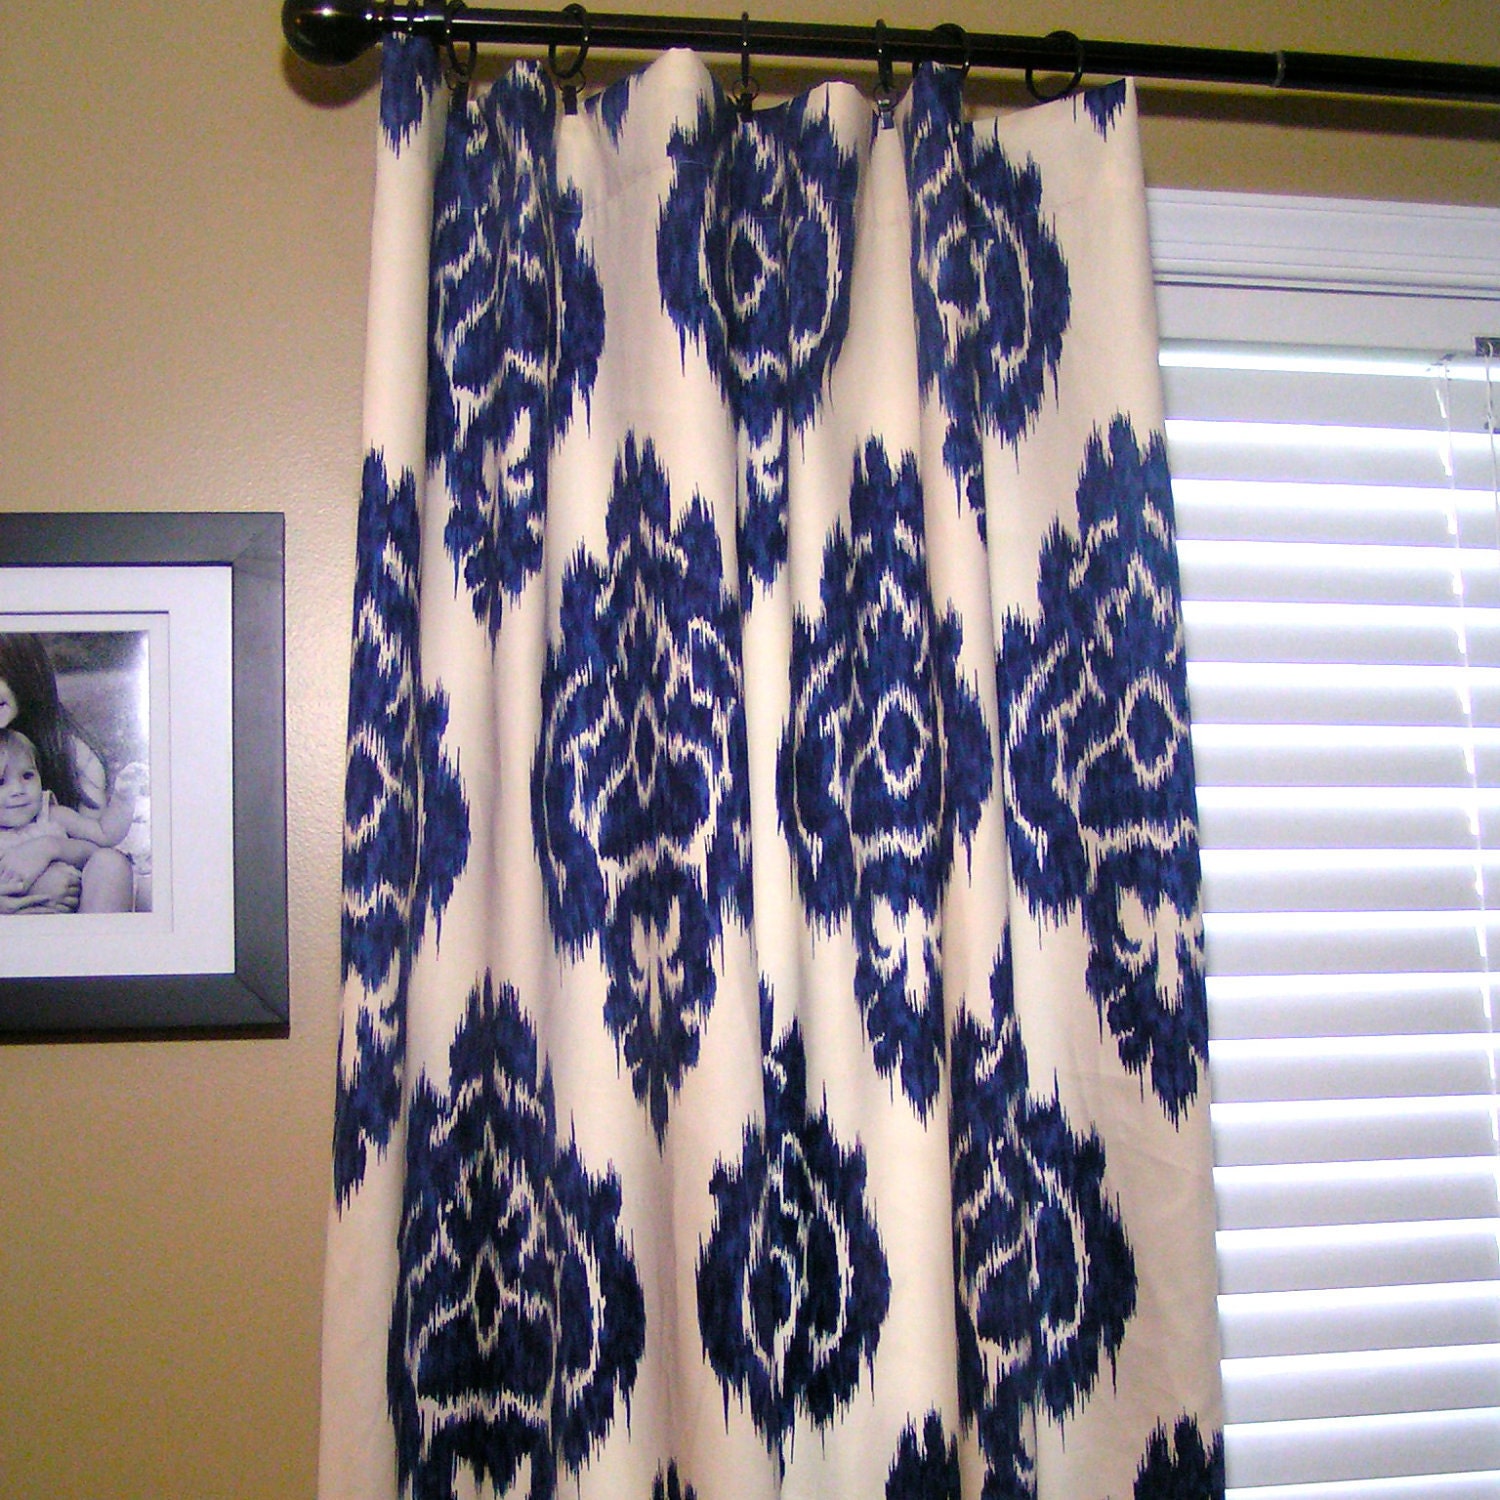 blue ikat fabric